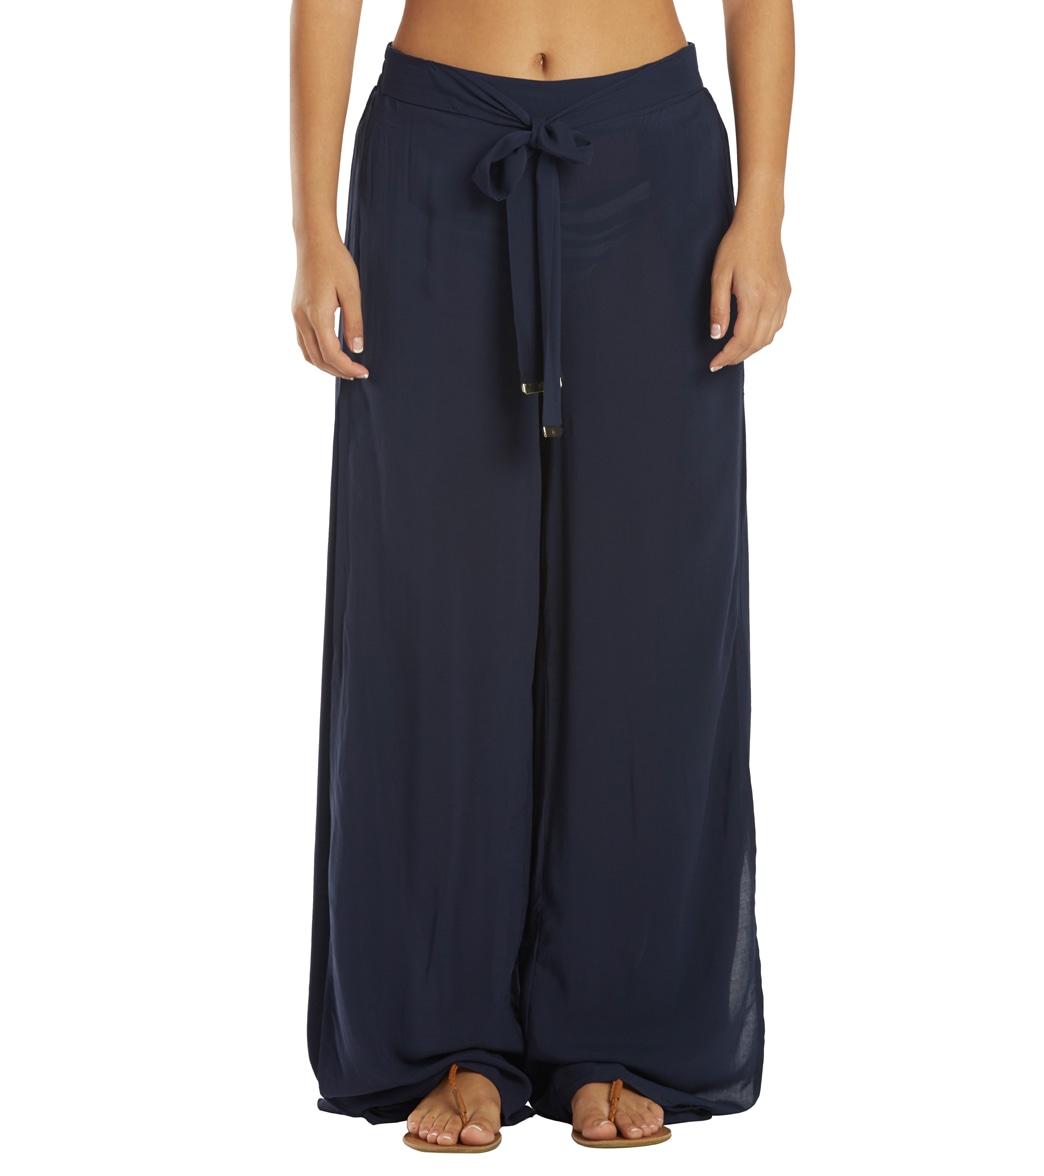 Michael Kors Women's Chain Solids Cover Up Pants With Belt - New Navy Medium - Swimoutlet.com